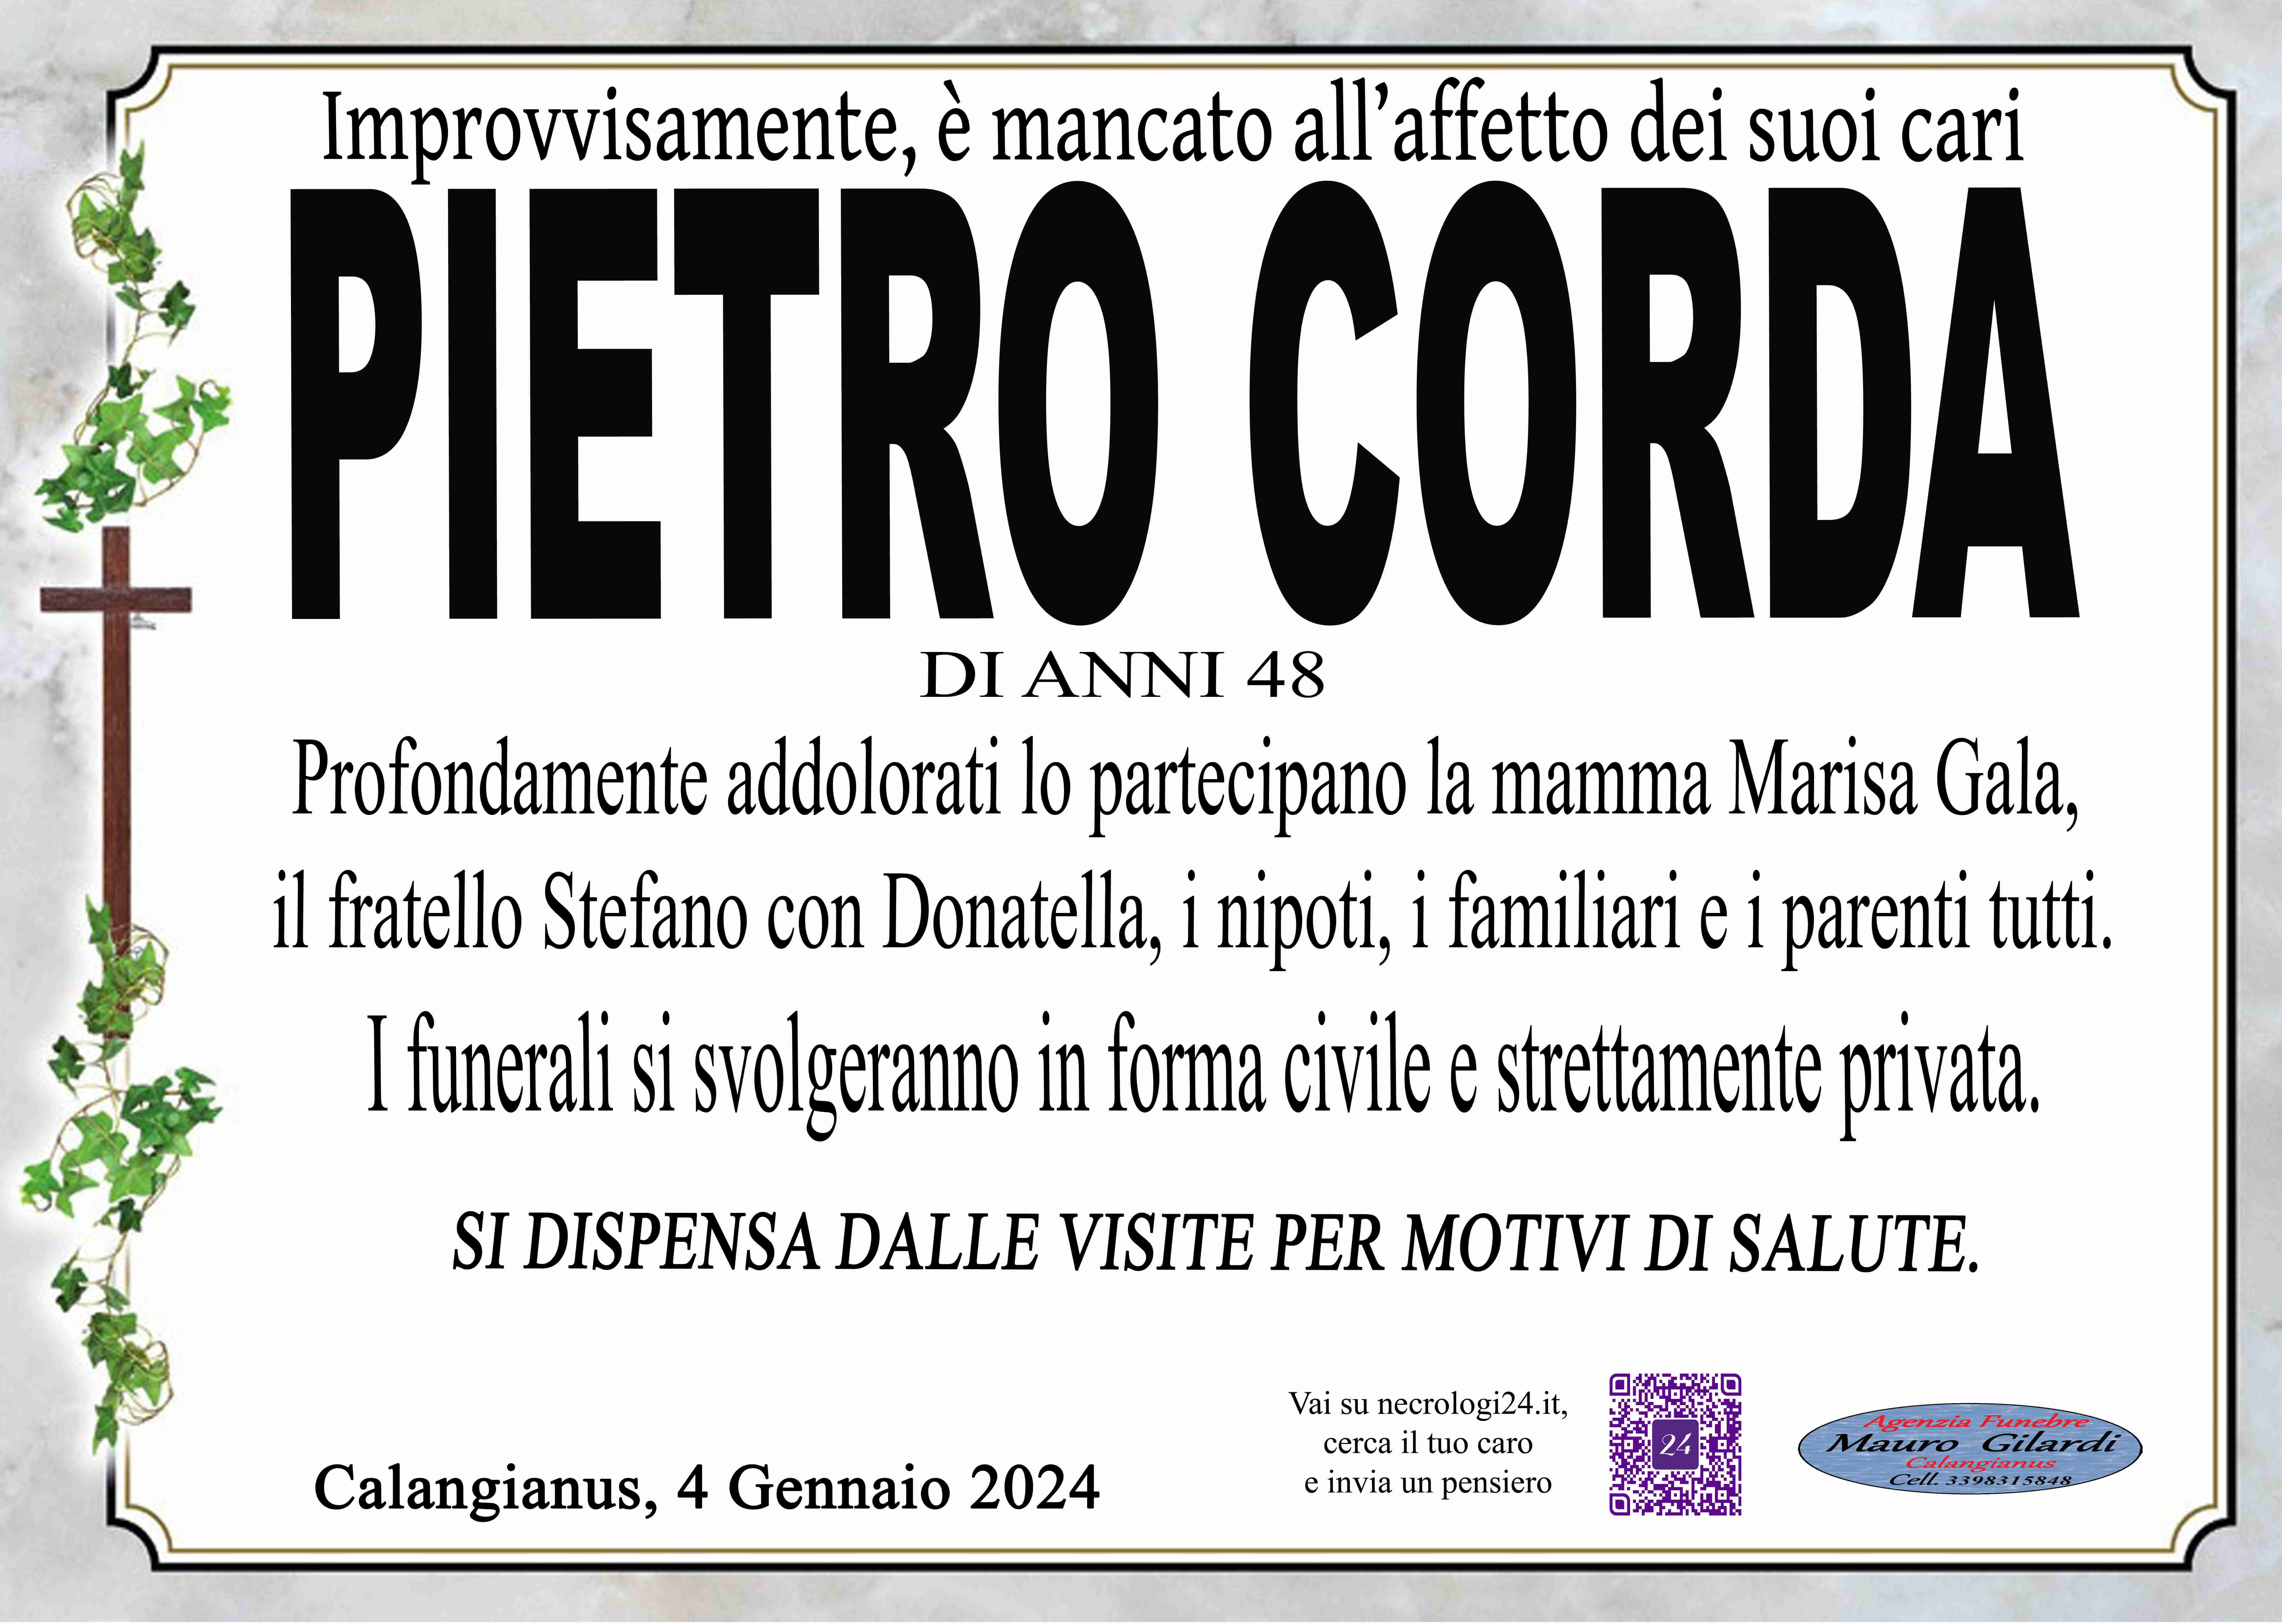 Pietro Corda